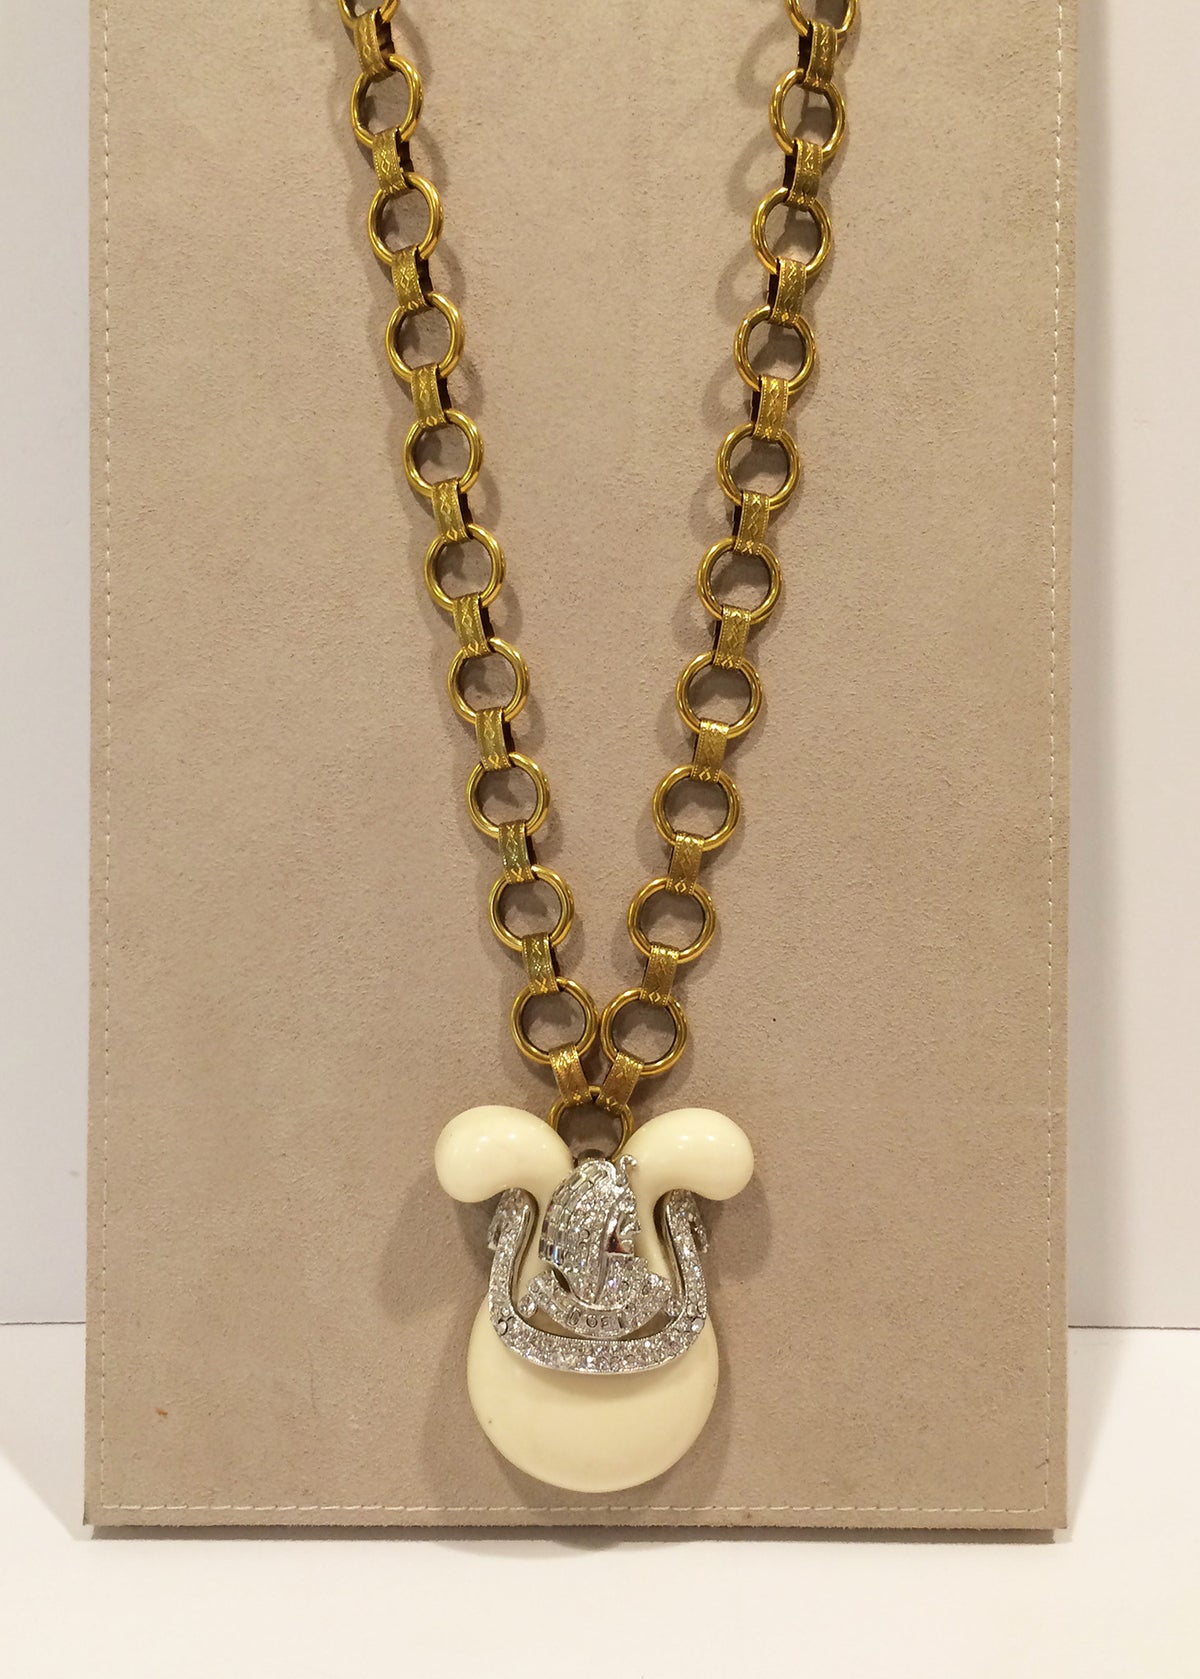 Egyptomania Pendant (30" long with 3" pendant)